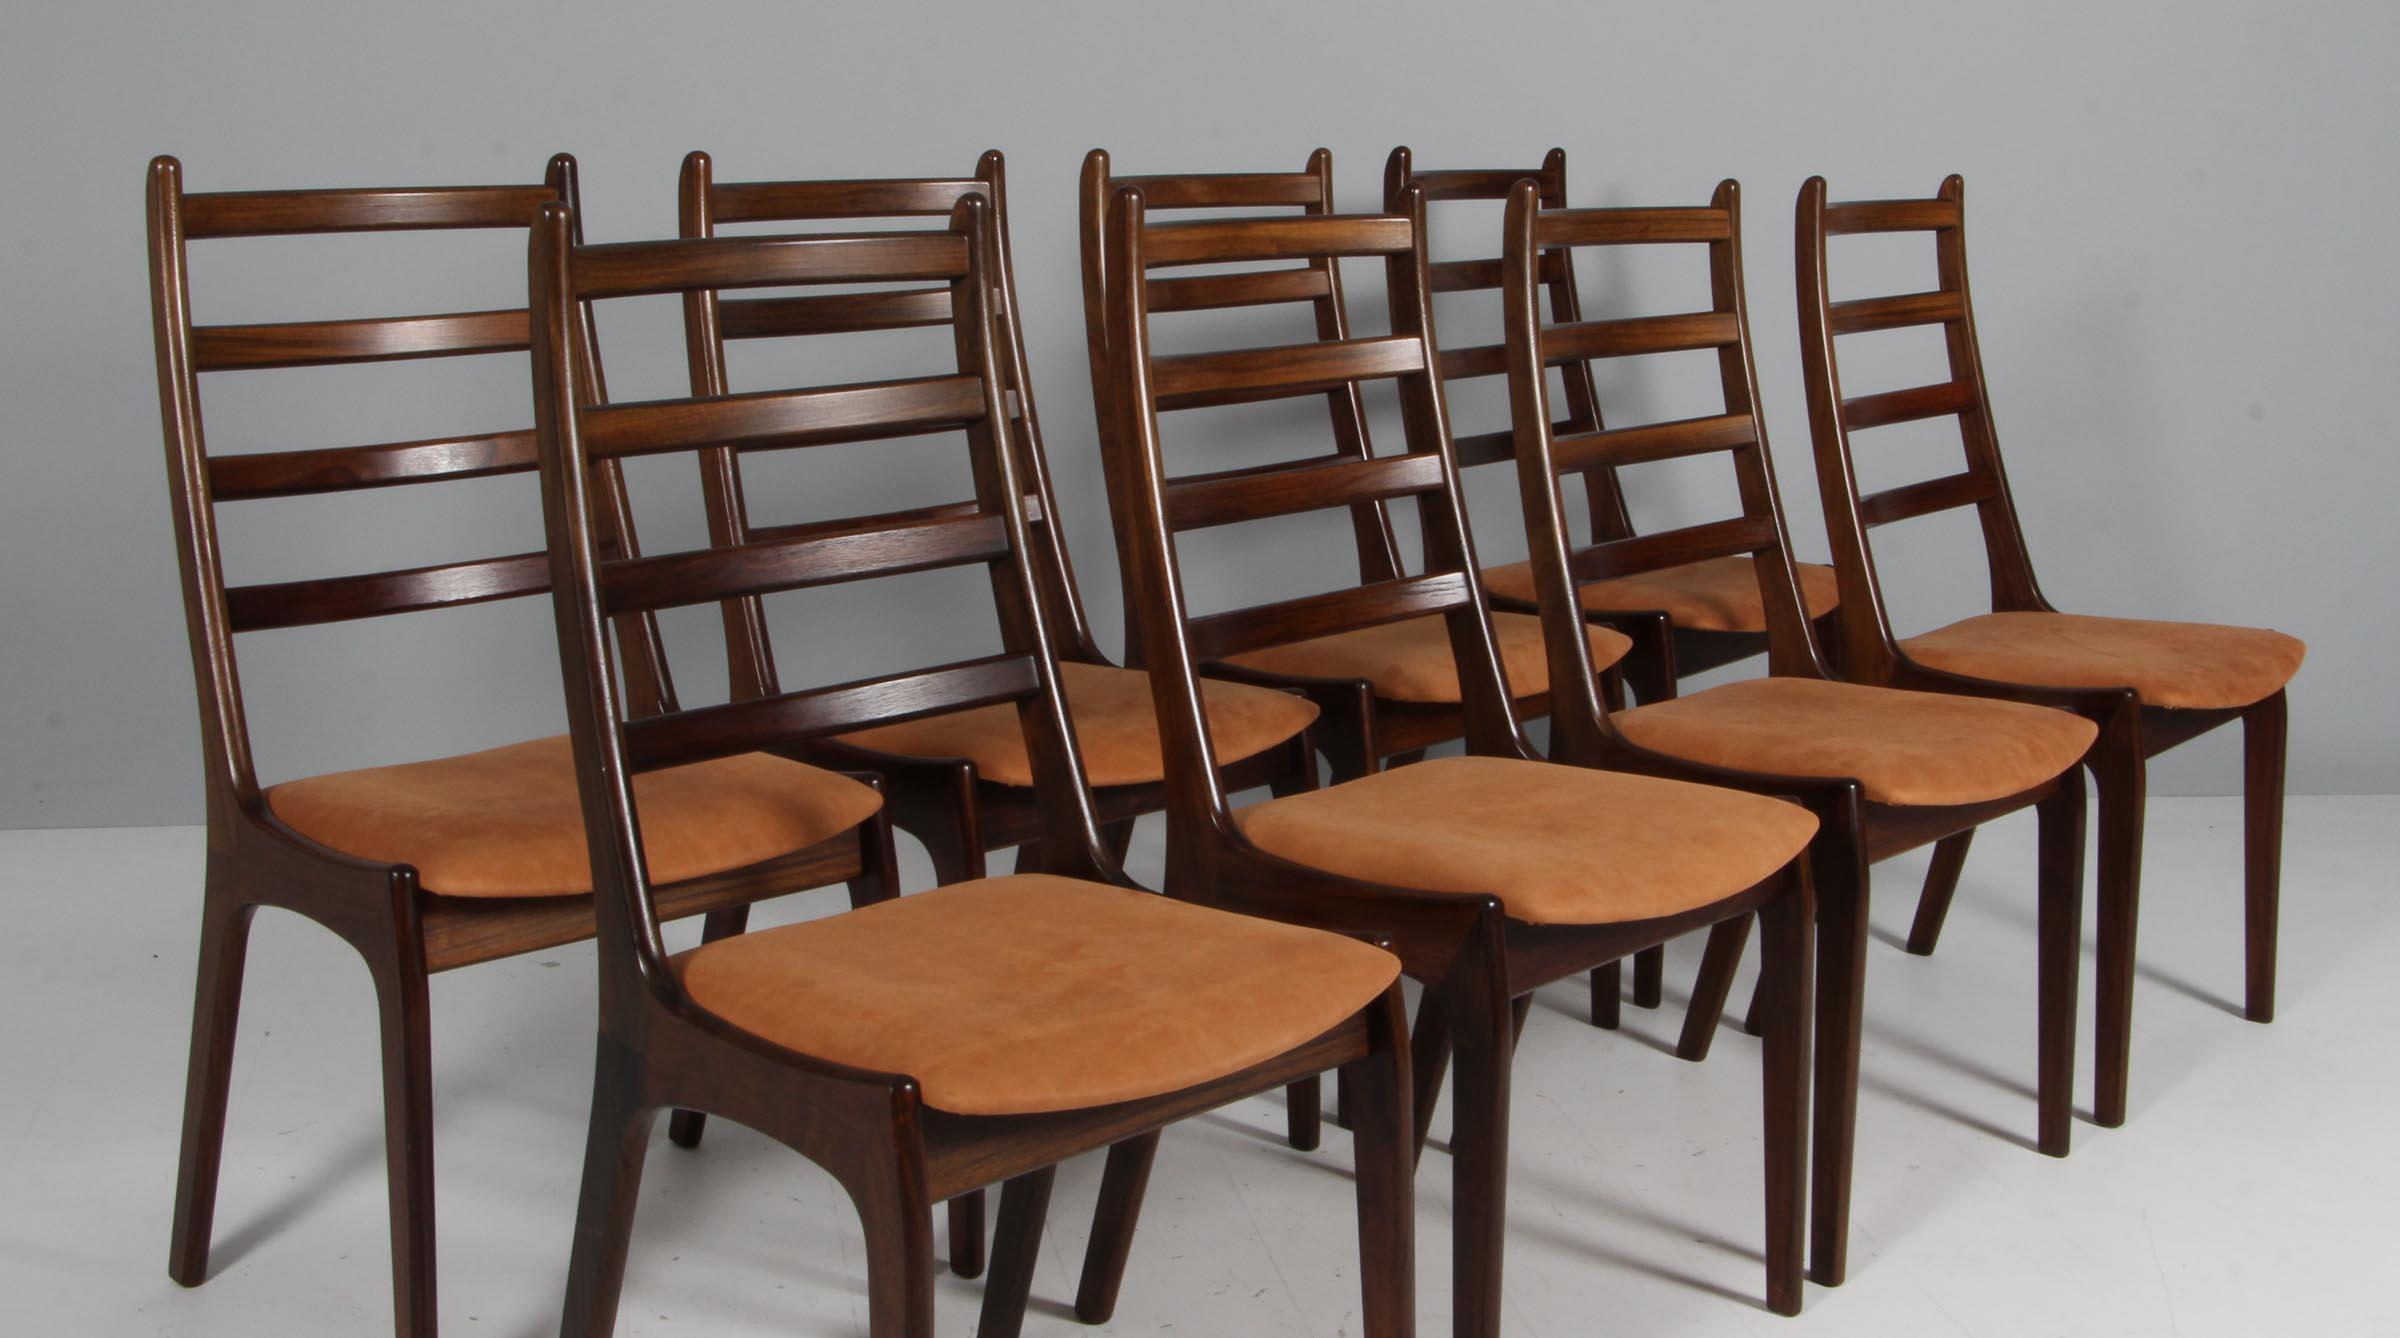 Scandinavian Modern Korup stolefabrik set of eight dining chairs in rosewood, 1960s Denmark